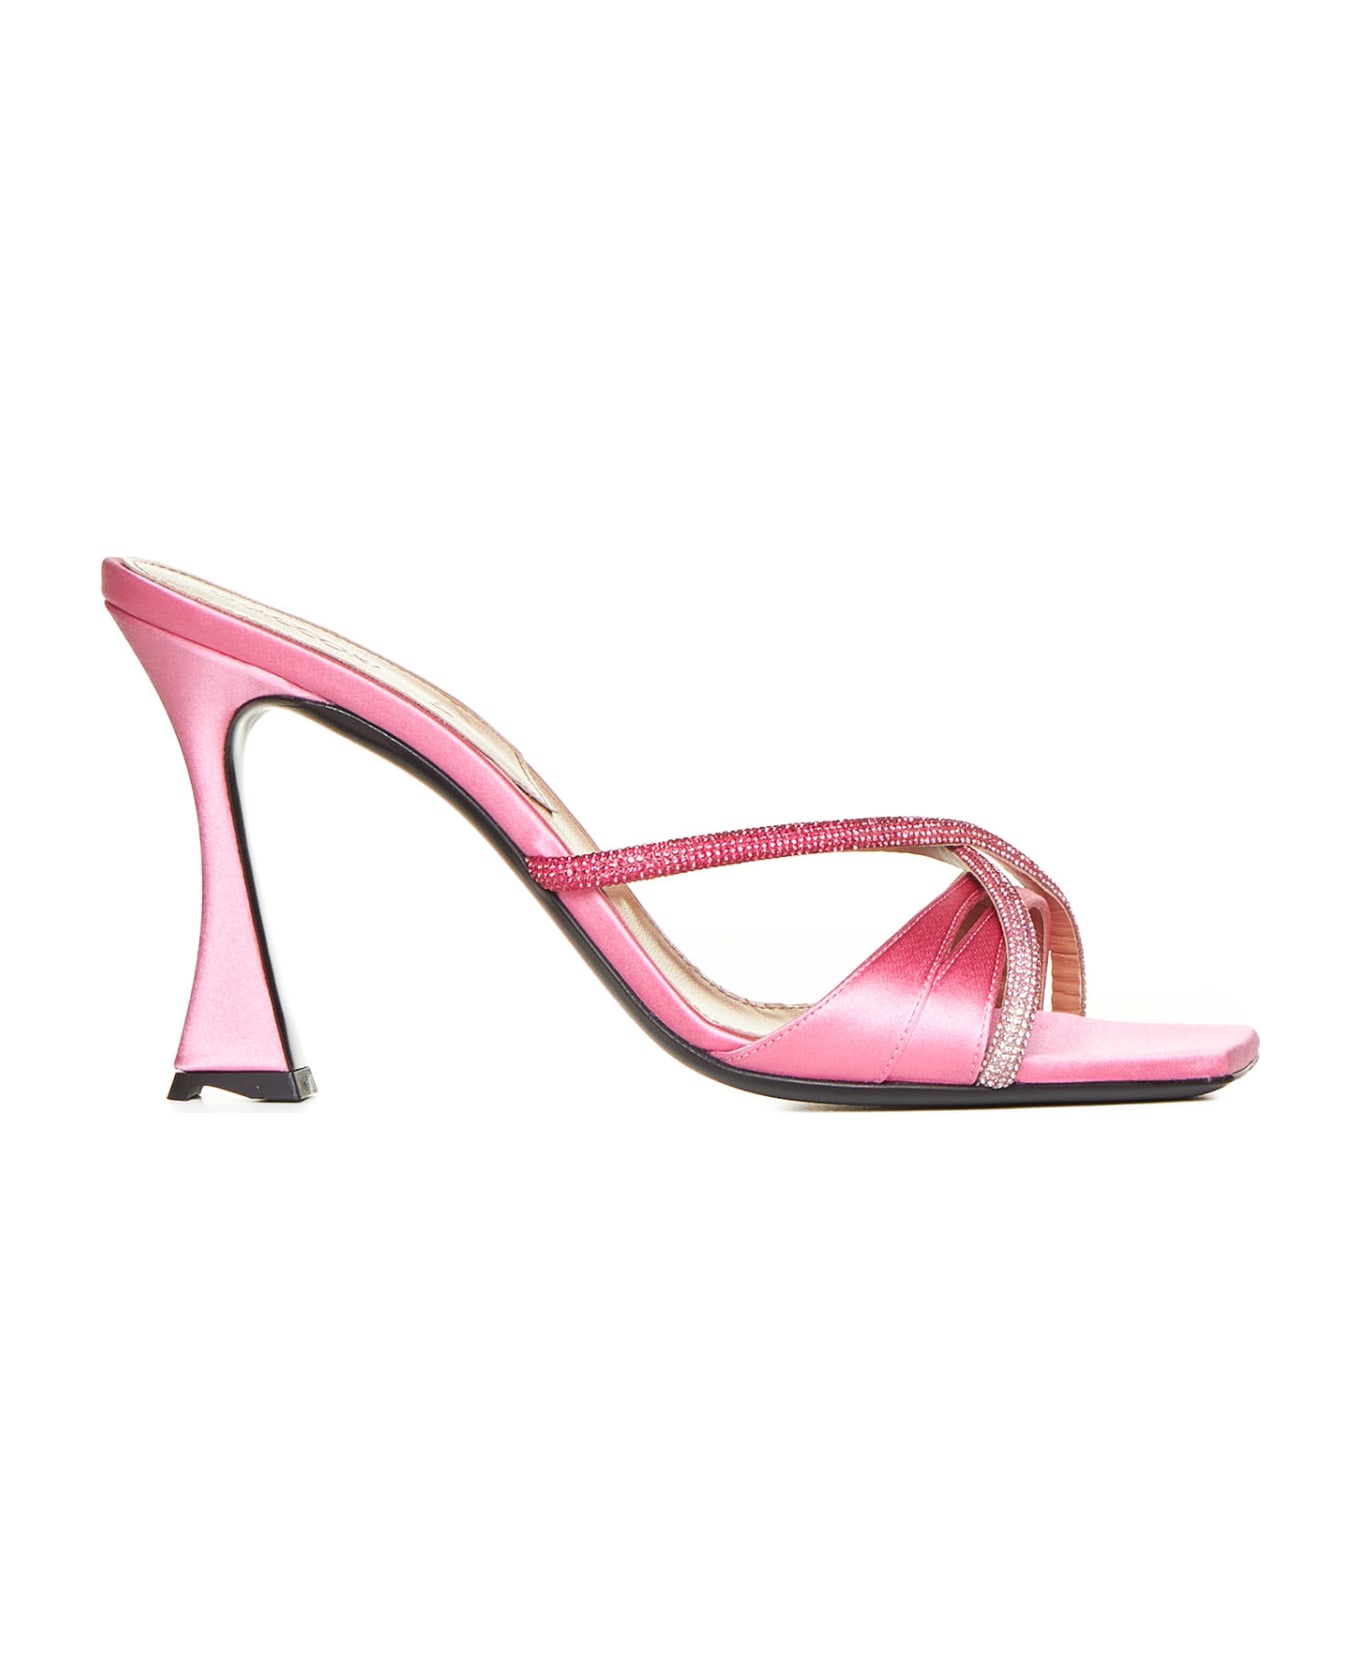 D'Accori Sandals - Powder pink crystal